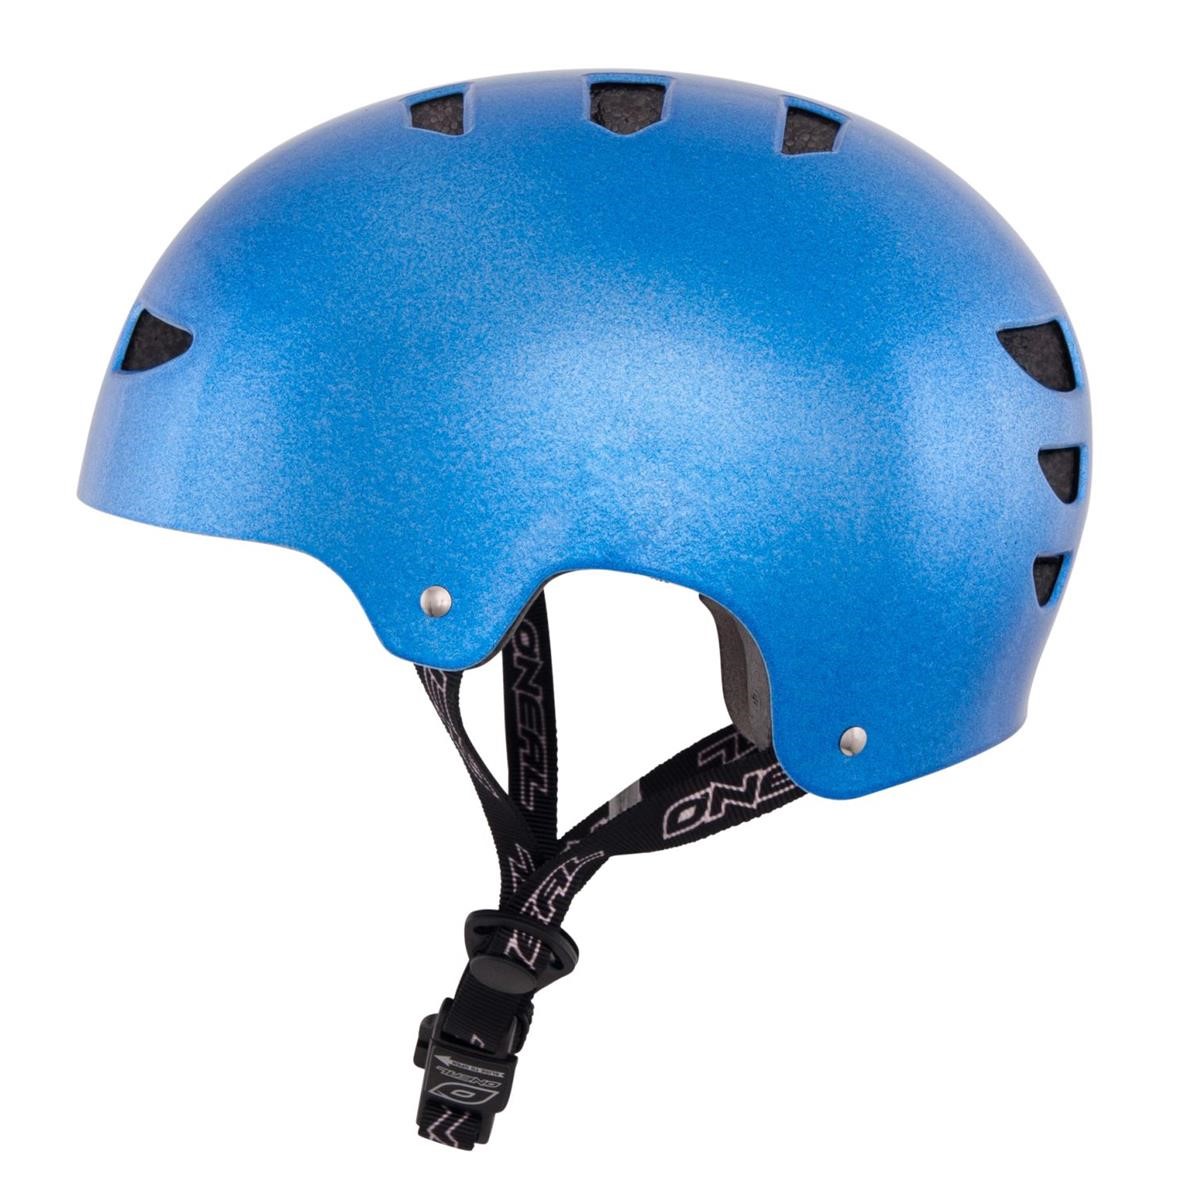 O'Neal BMX/Dirt Helm Dirt Lid Metalflake - Blau